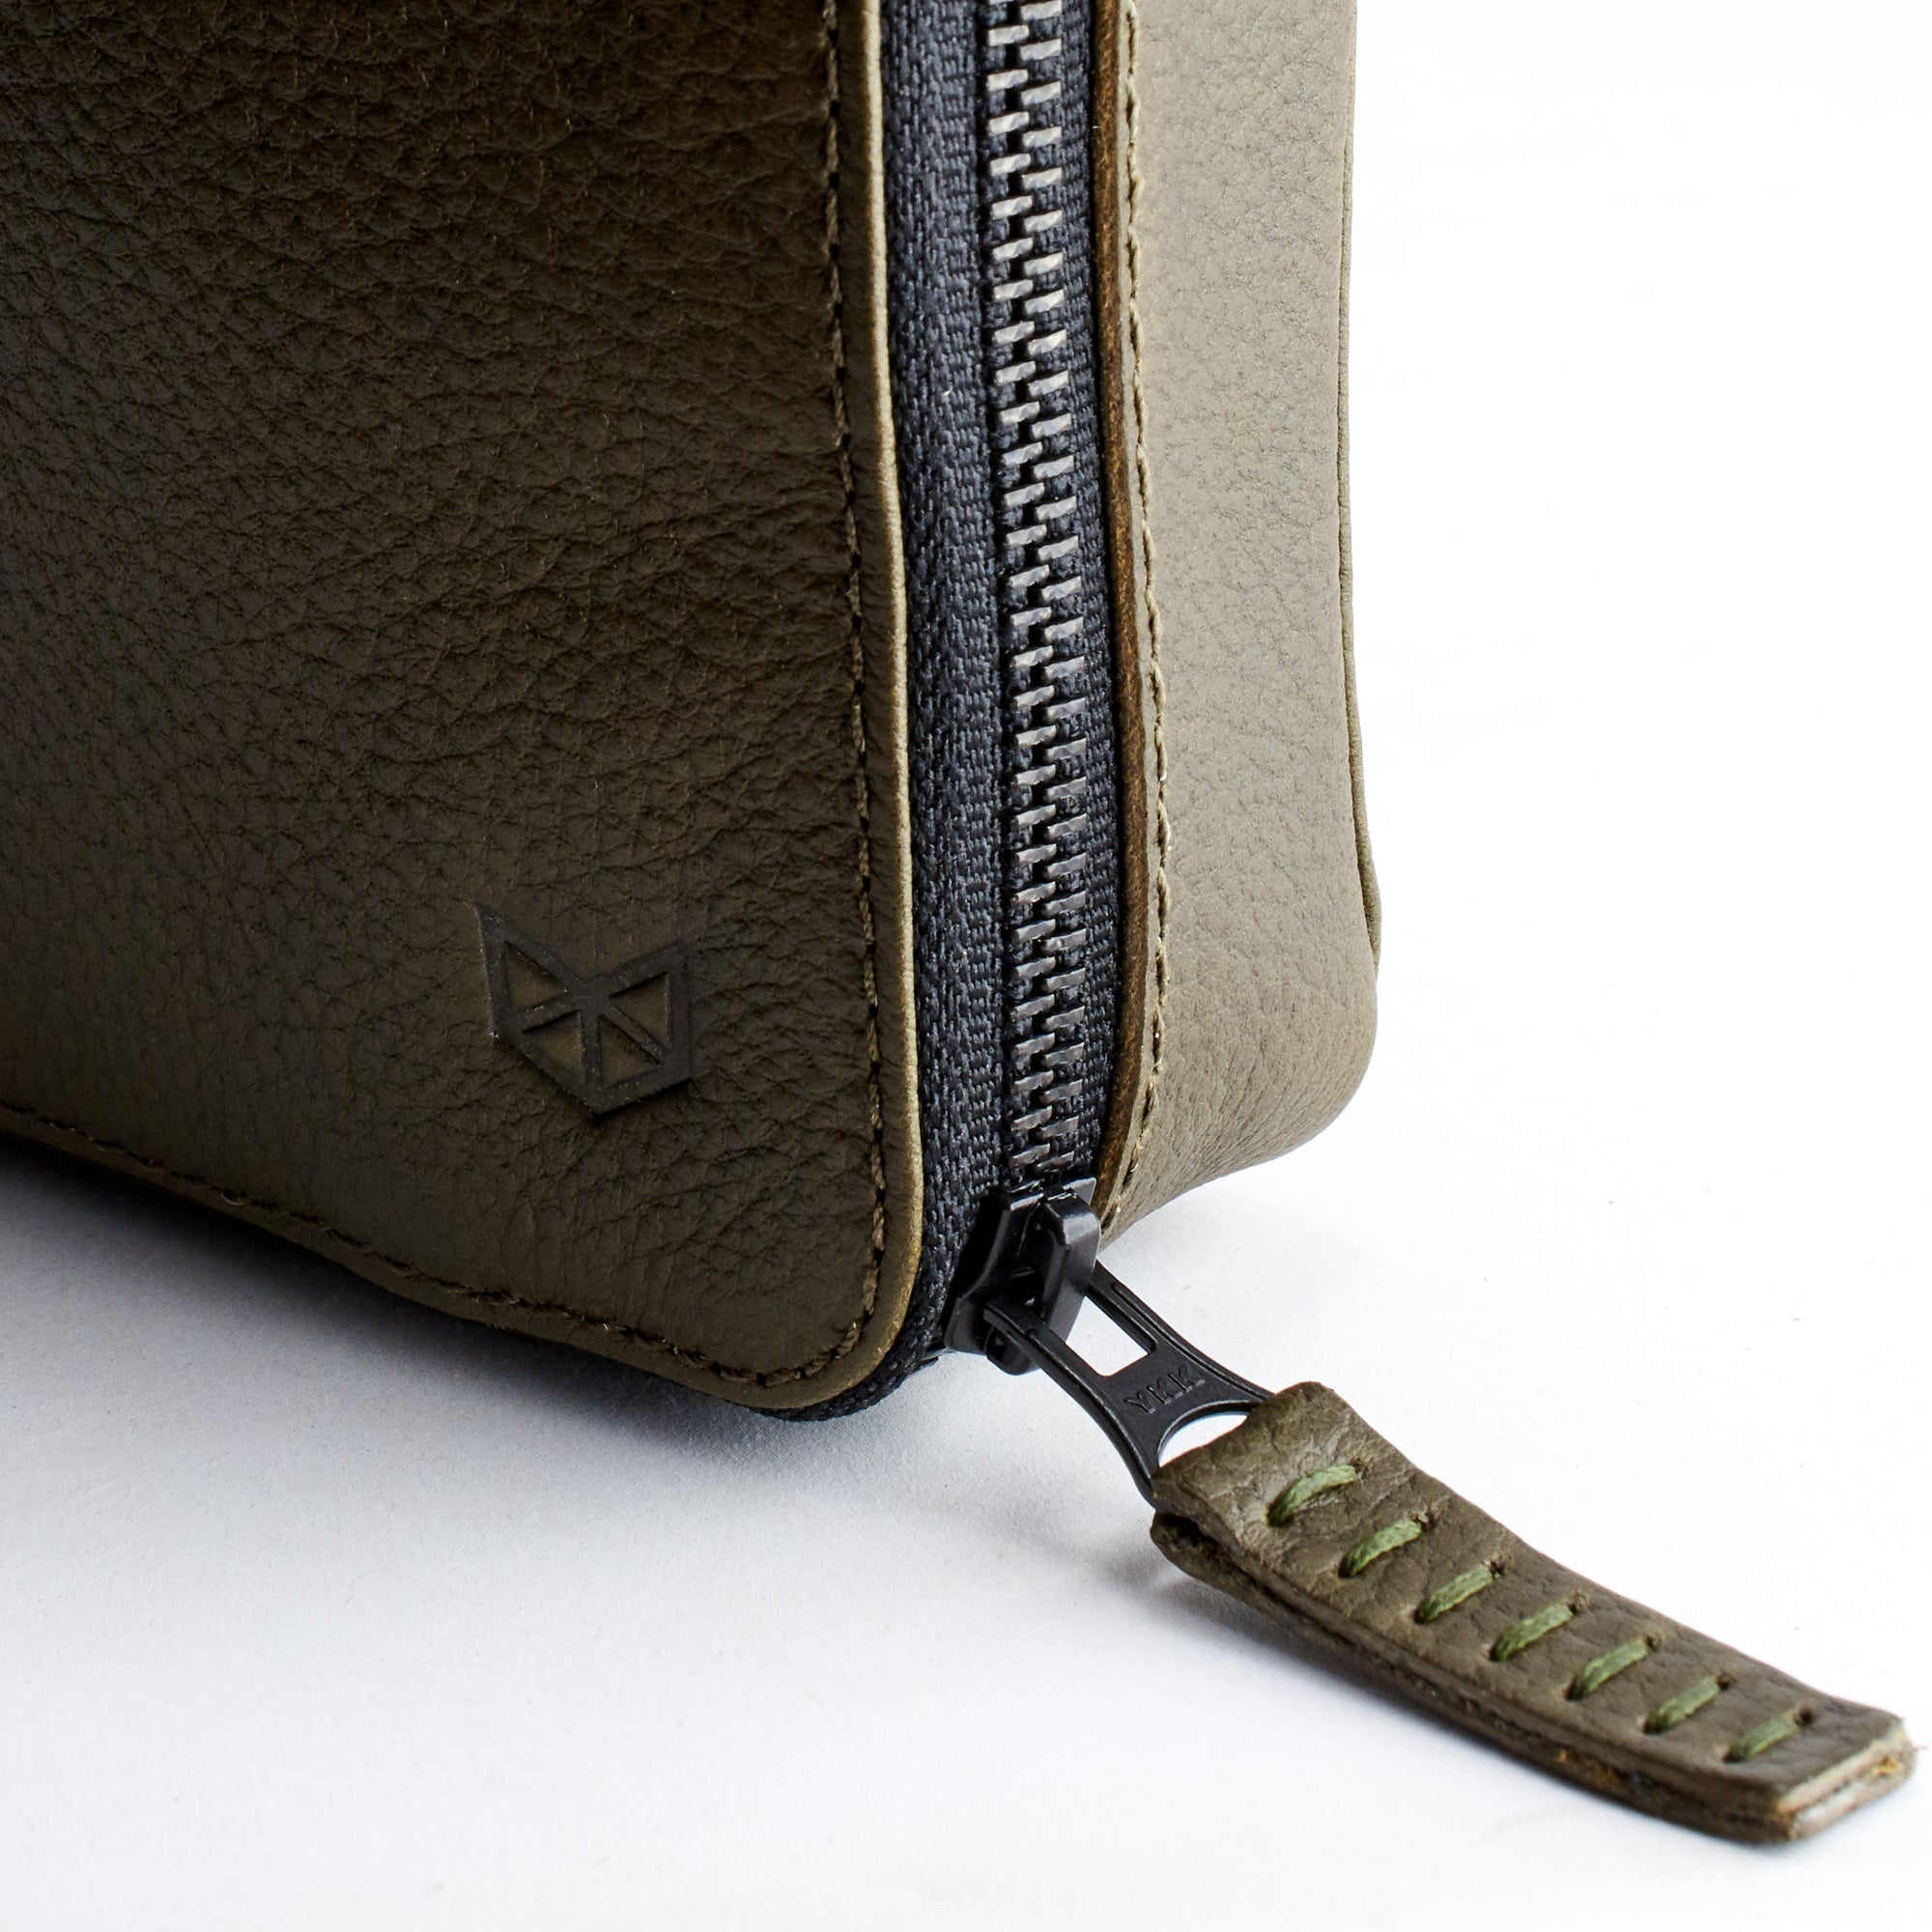 YKK metallic zippers. Green leather travel gadget bag by Capra